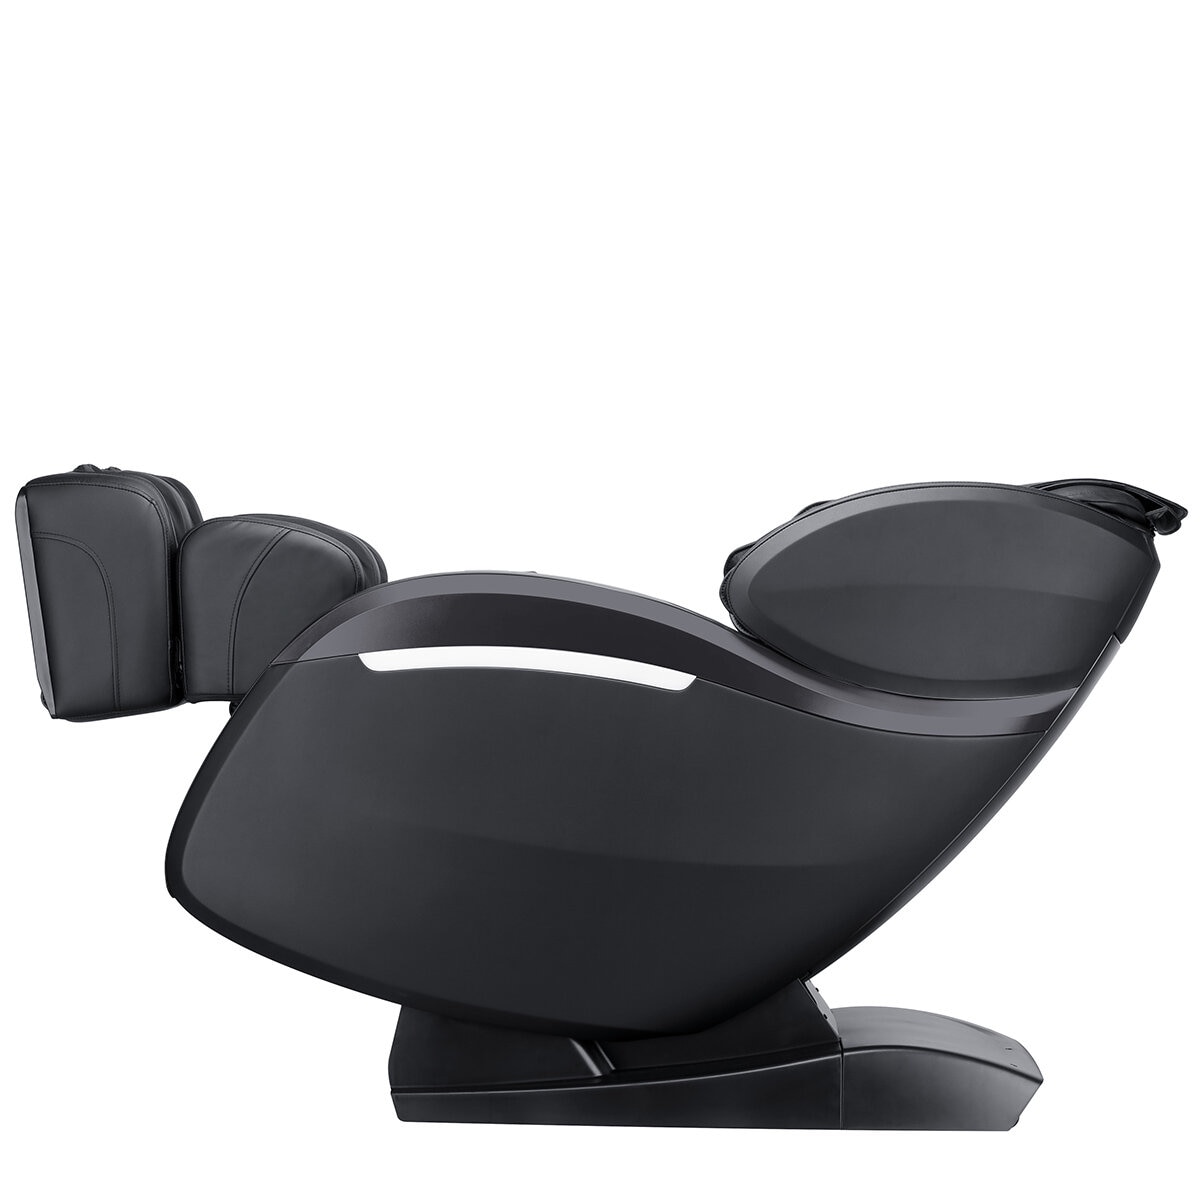 Masseuse Massage Terapeutica Massage Chair